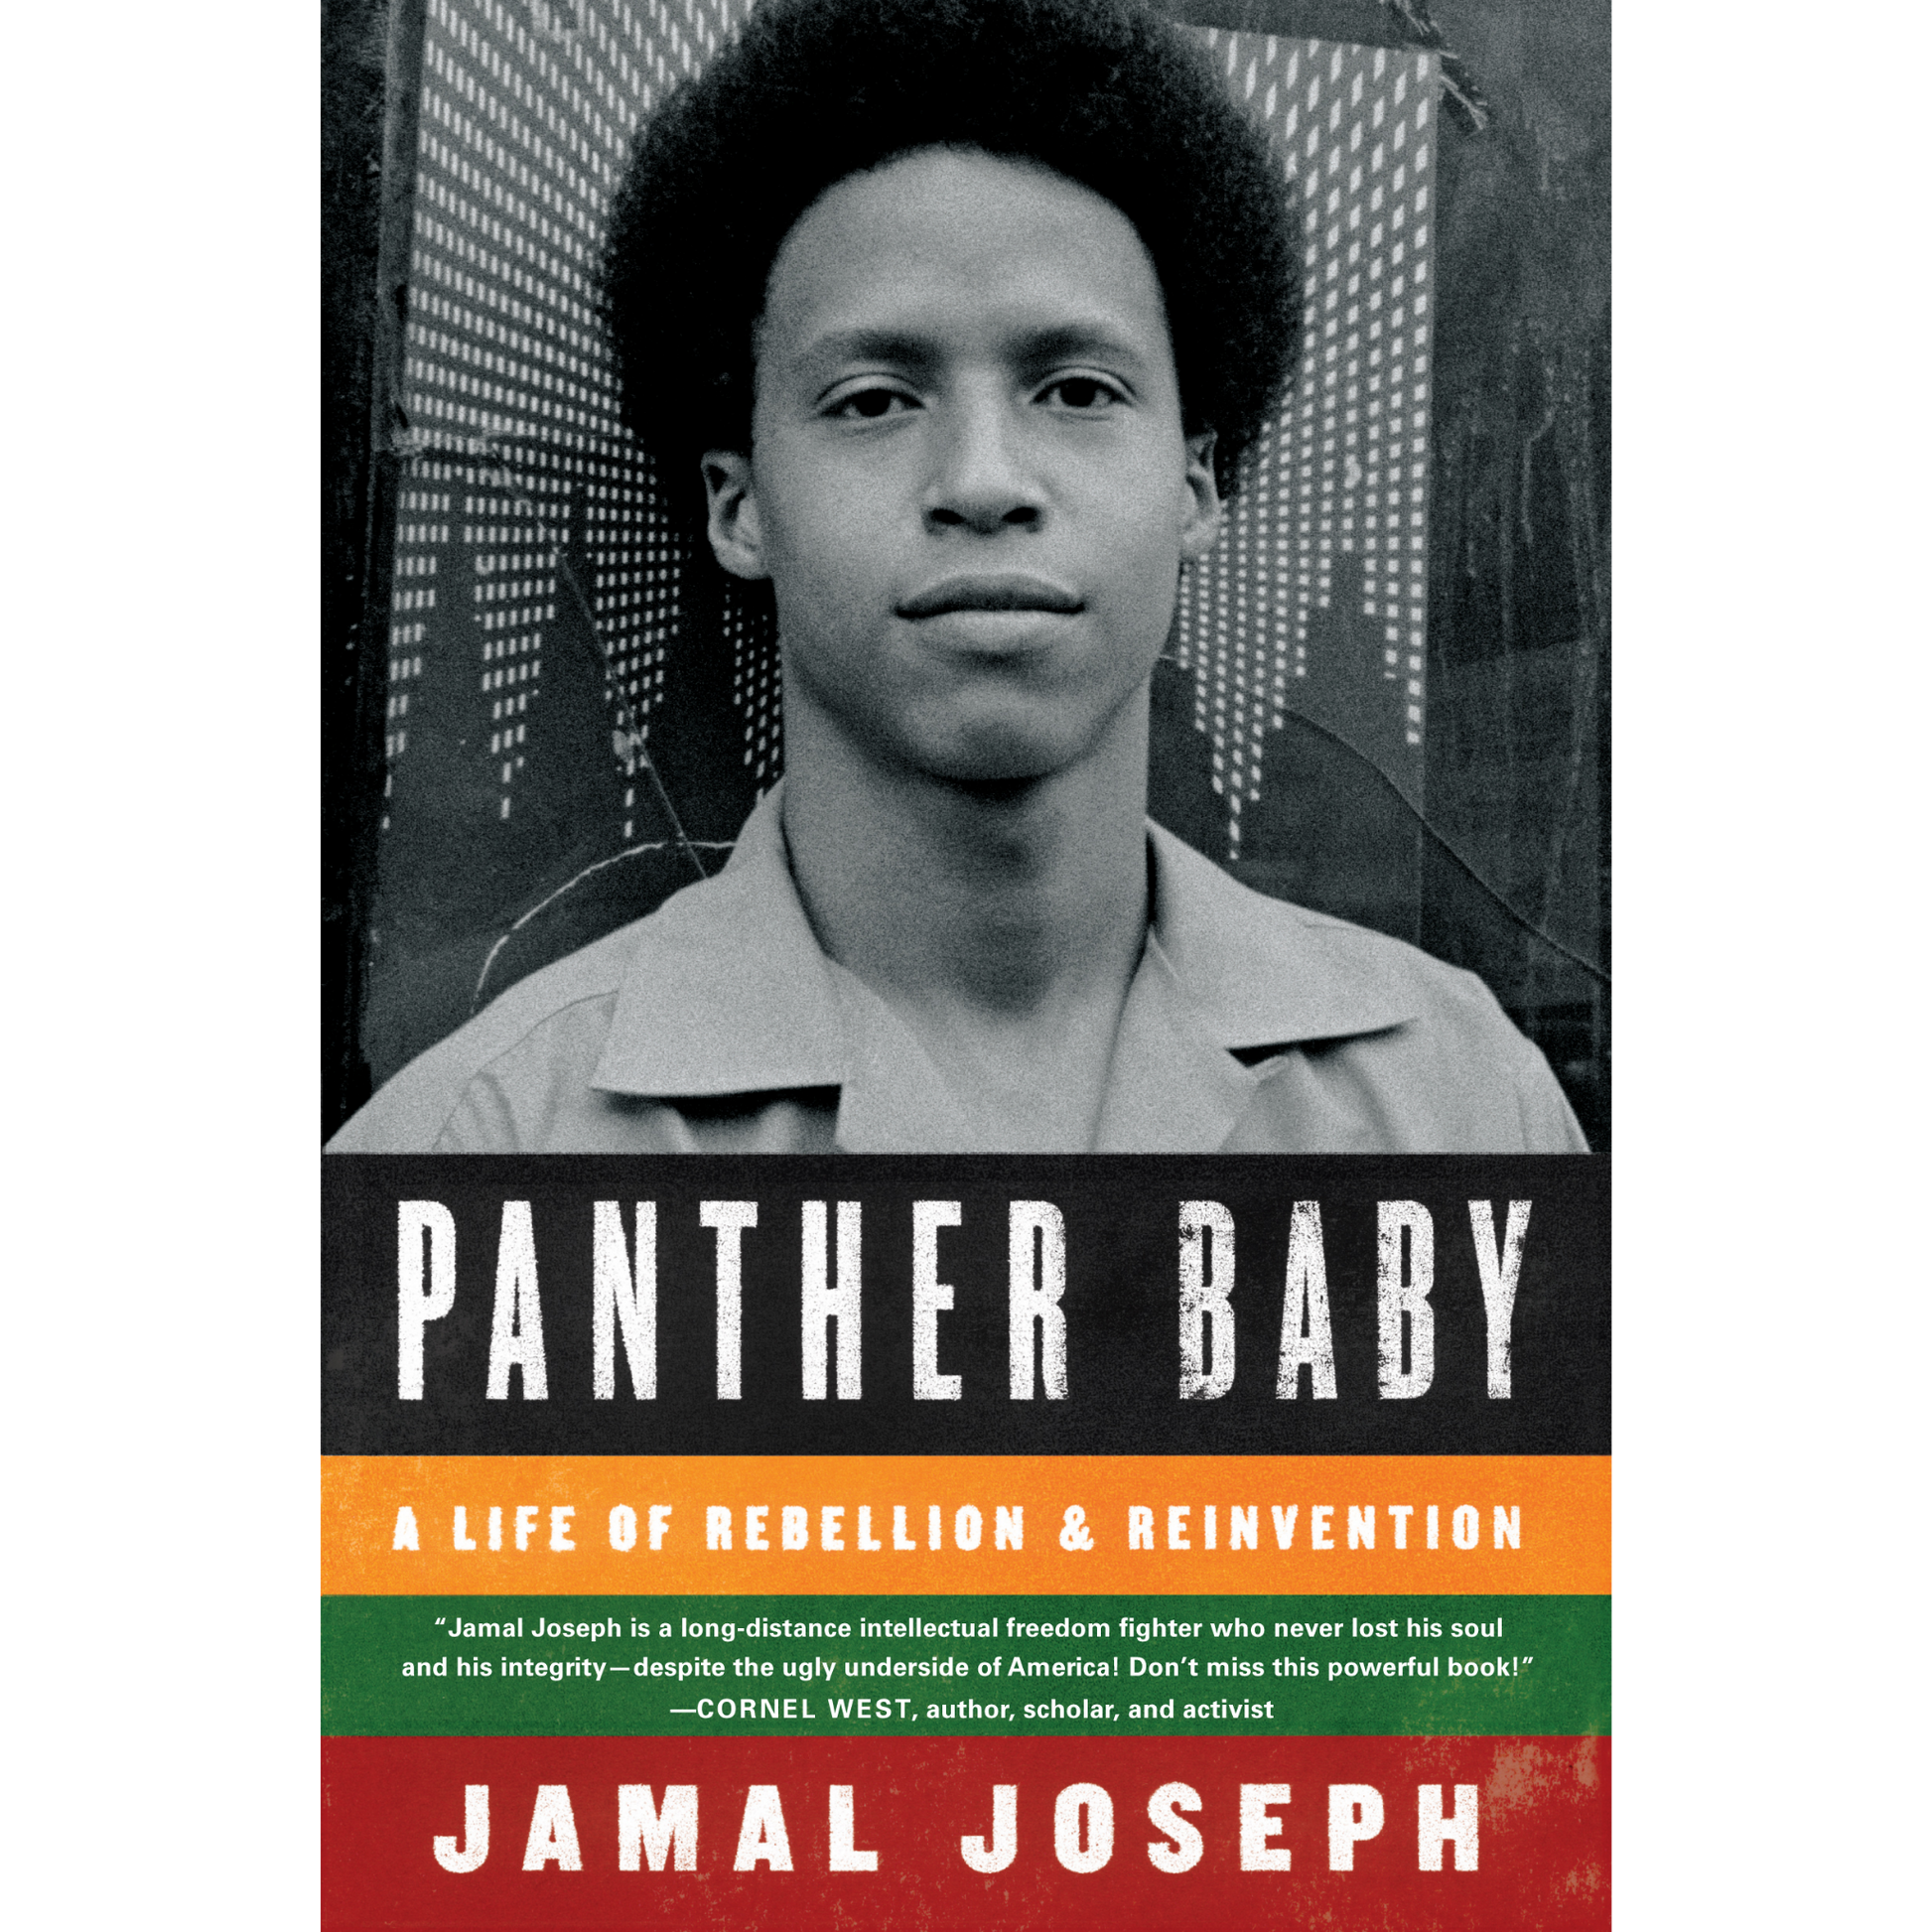 panther baby jamal joseph